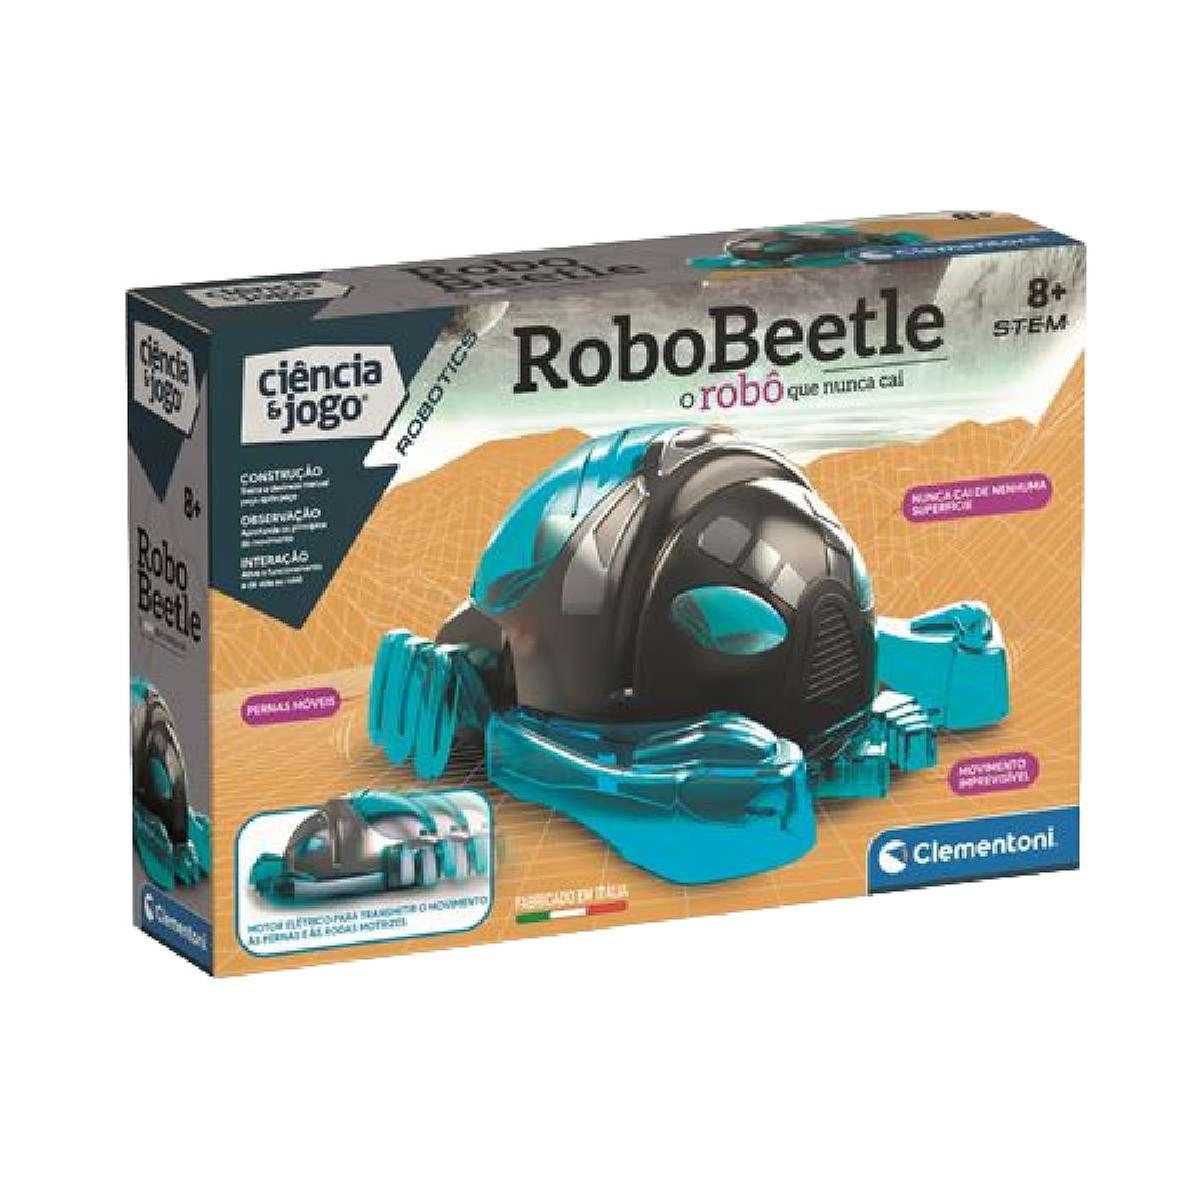 Ciência e jogo - Robo Beetle, Clementoni ciência